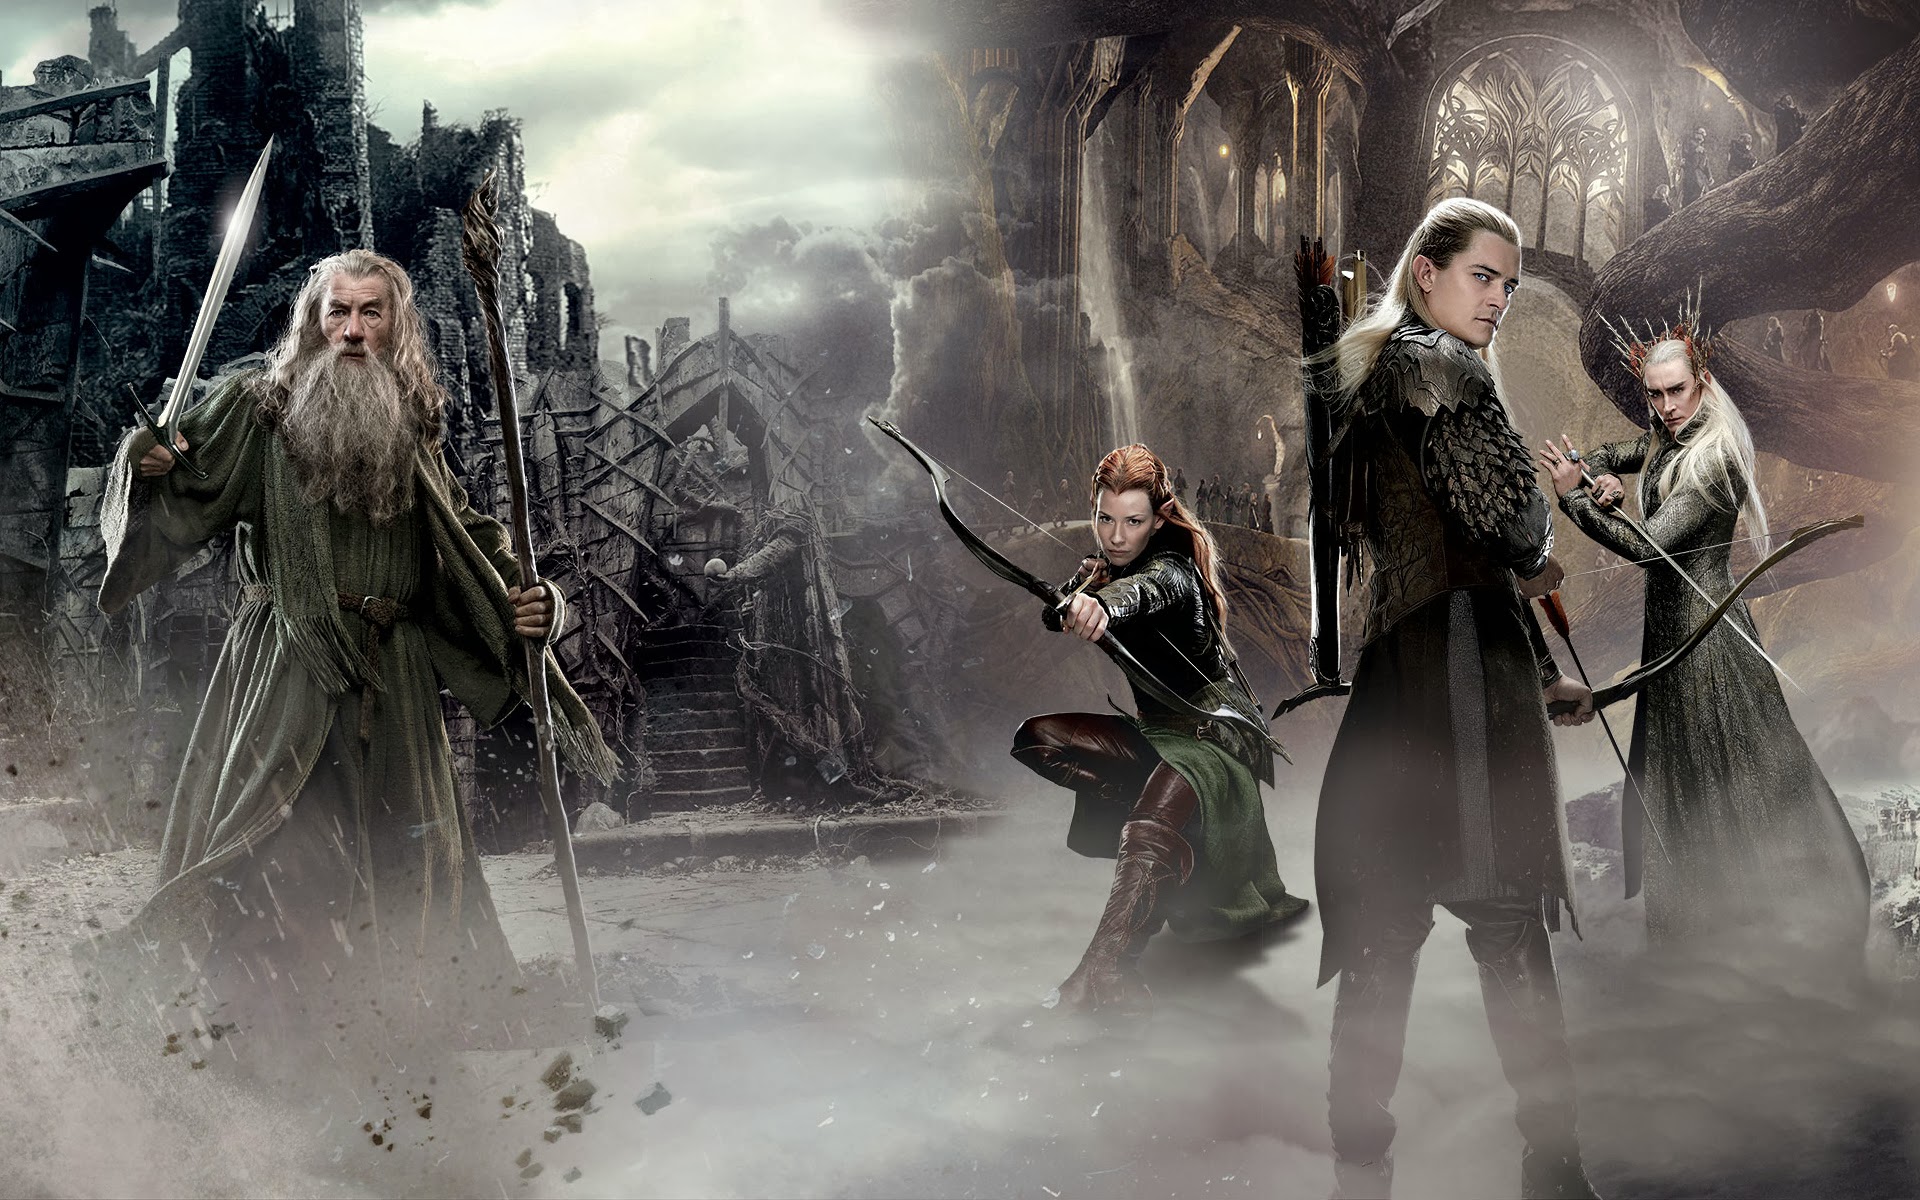 The Hobbit 2013 - Wallpaper, High Definition, High Quality, Widescreen